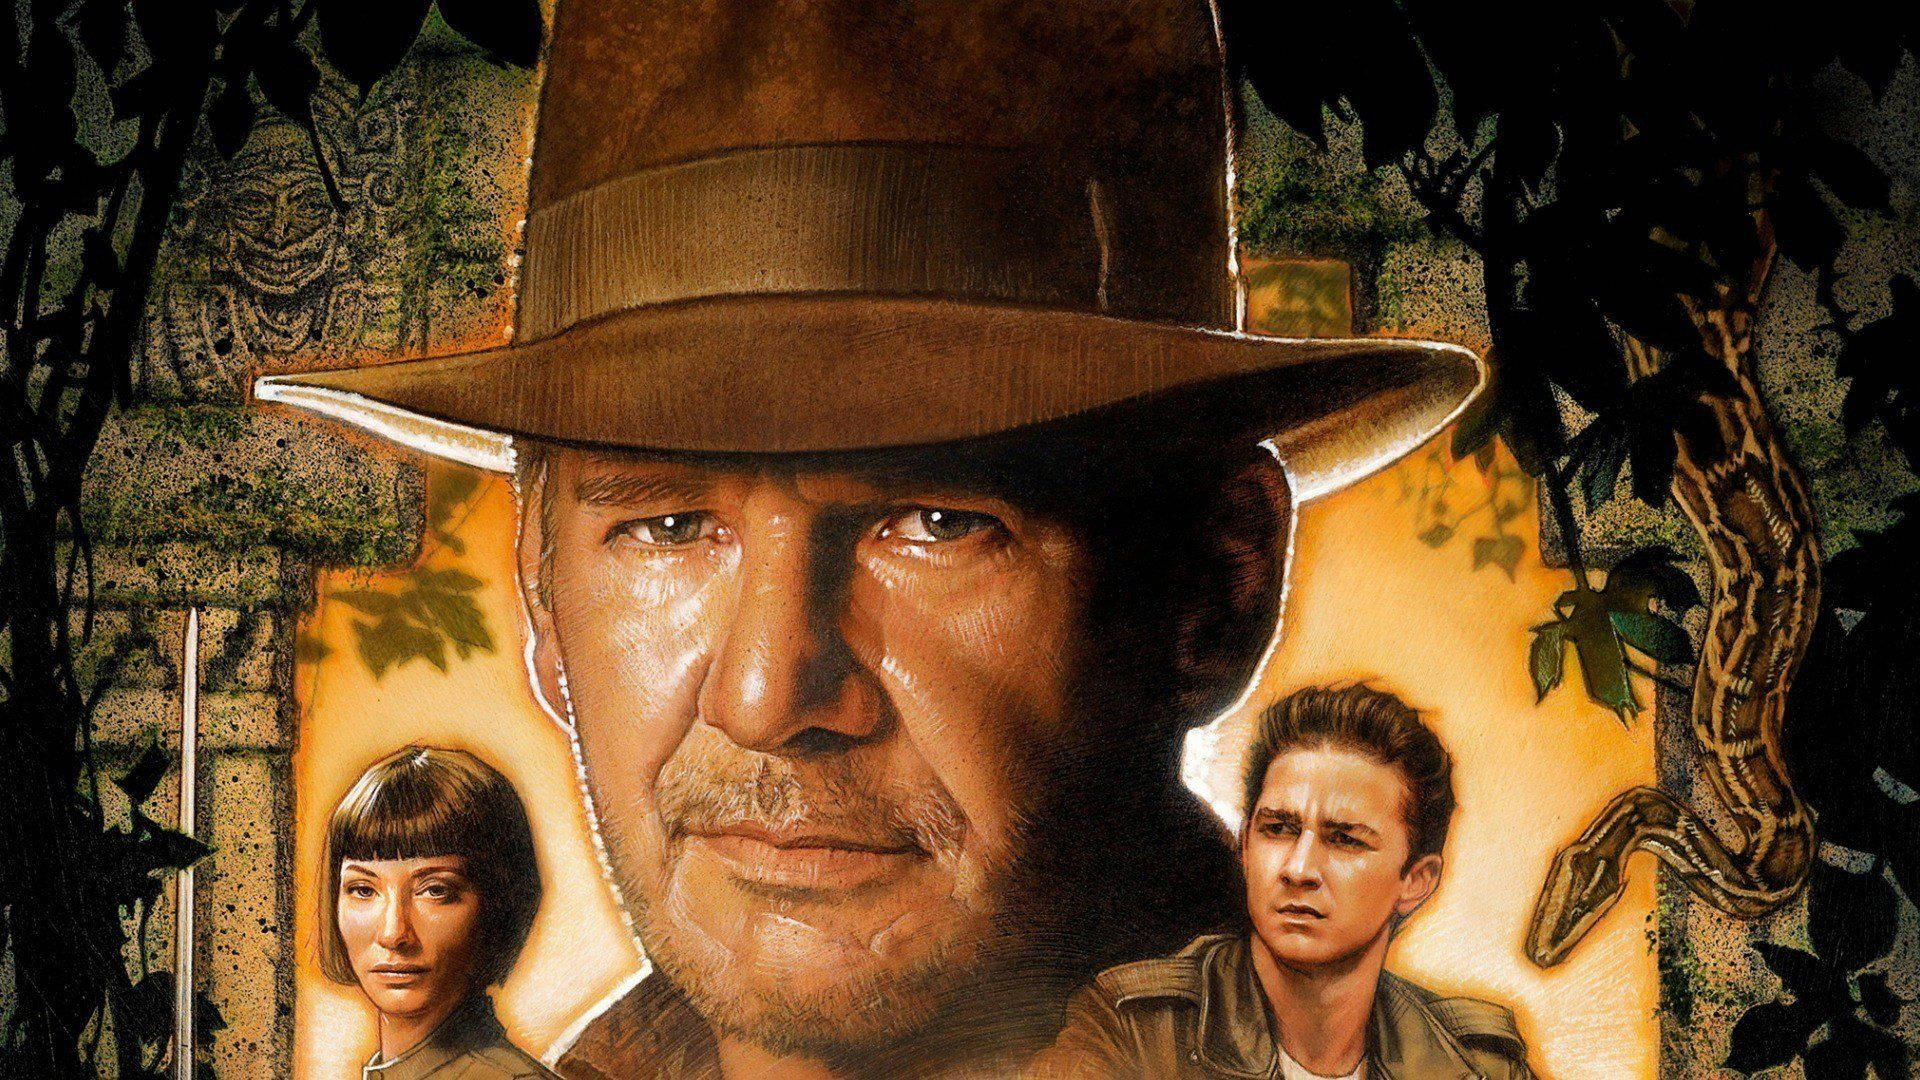 Indiana Jones Film Series